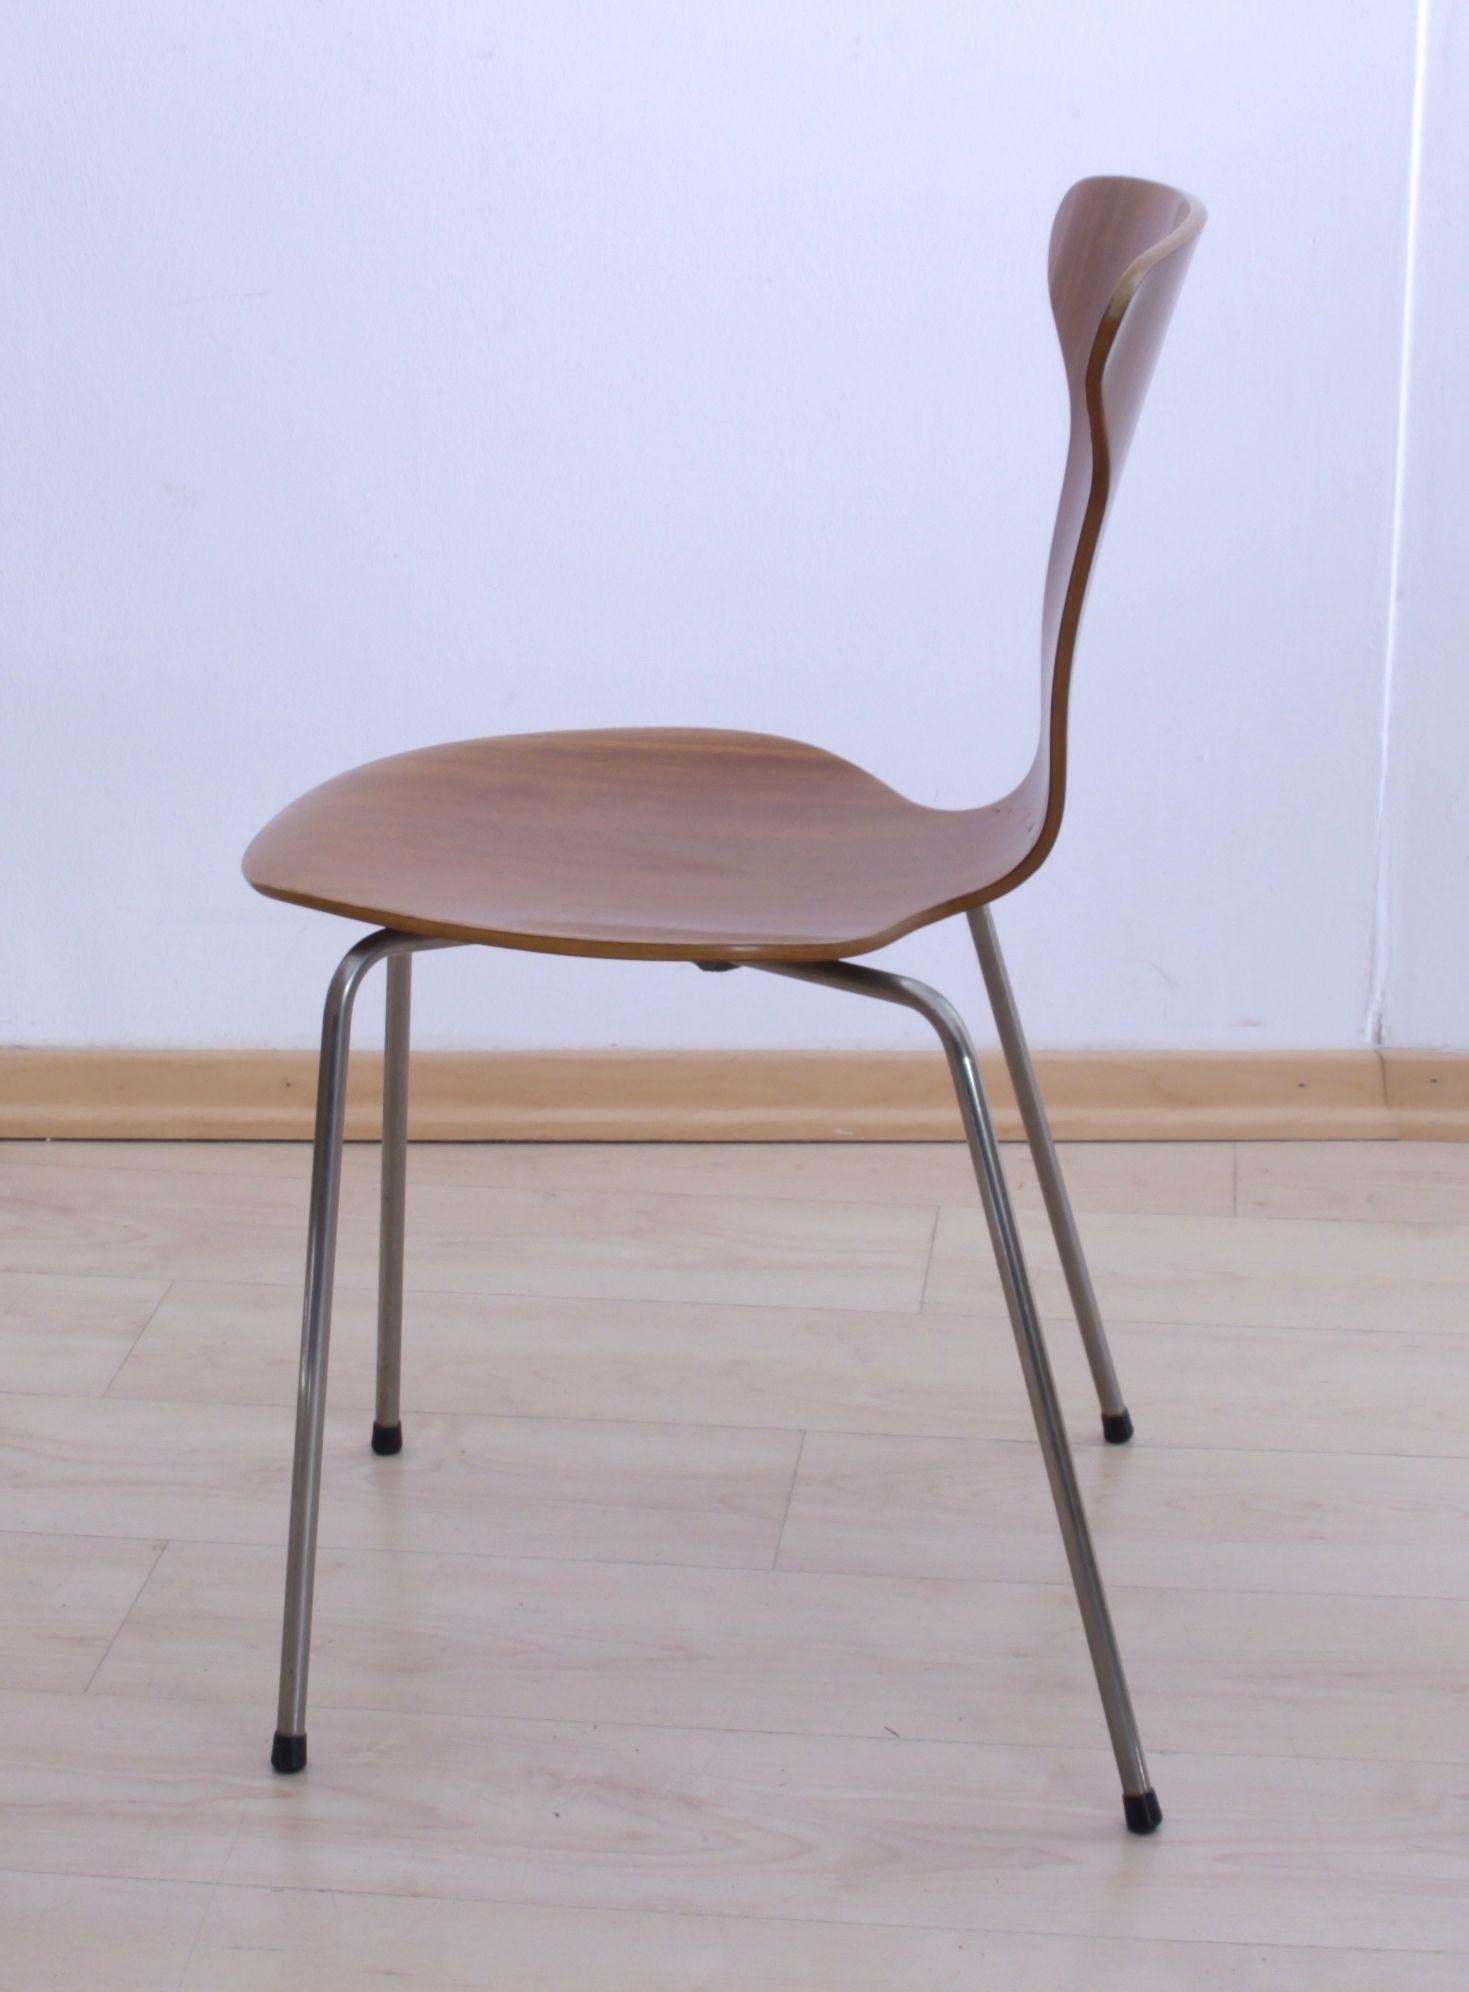 Danish Pair of 3105 'Mosquito' Chairs by Arne Jacobsen, F. Hansen, Teak, Denmark, 1950s For Sale